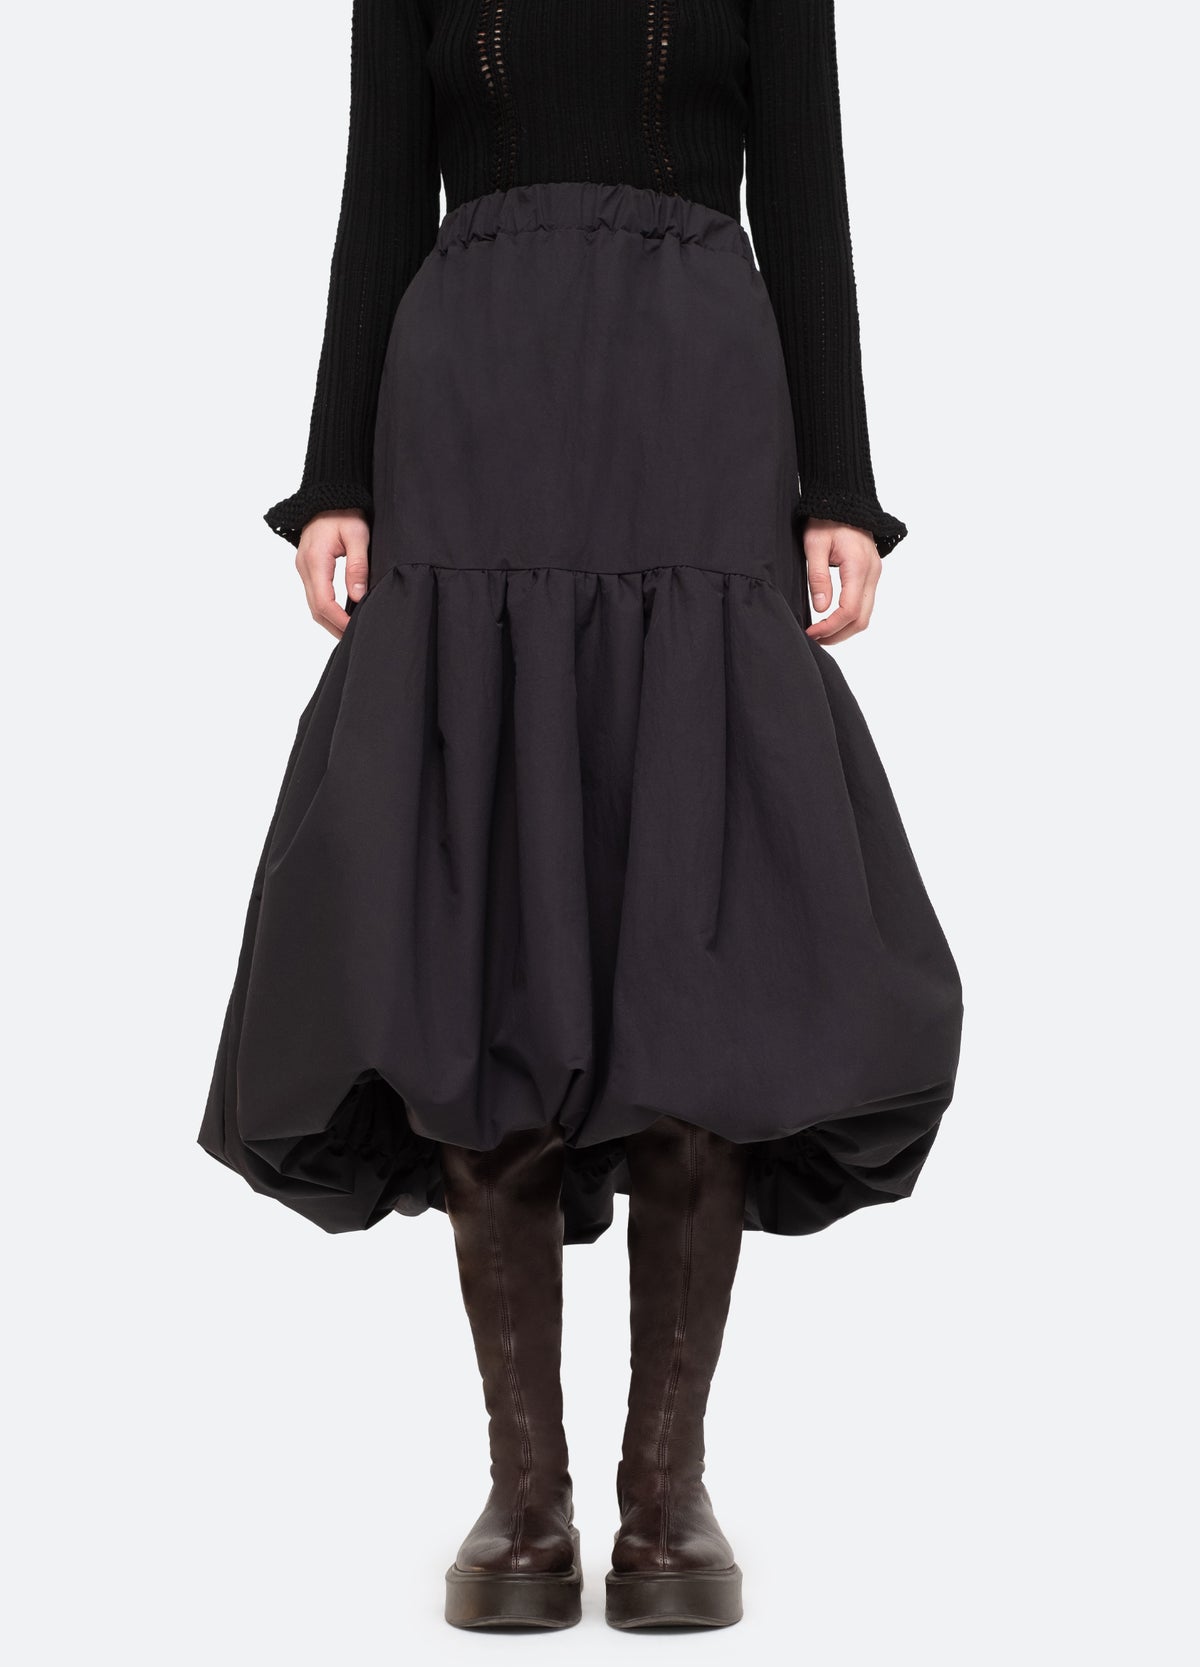 black-macie skirt-front view - 1